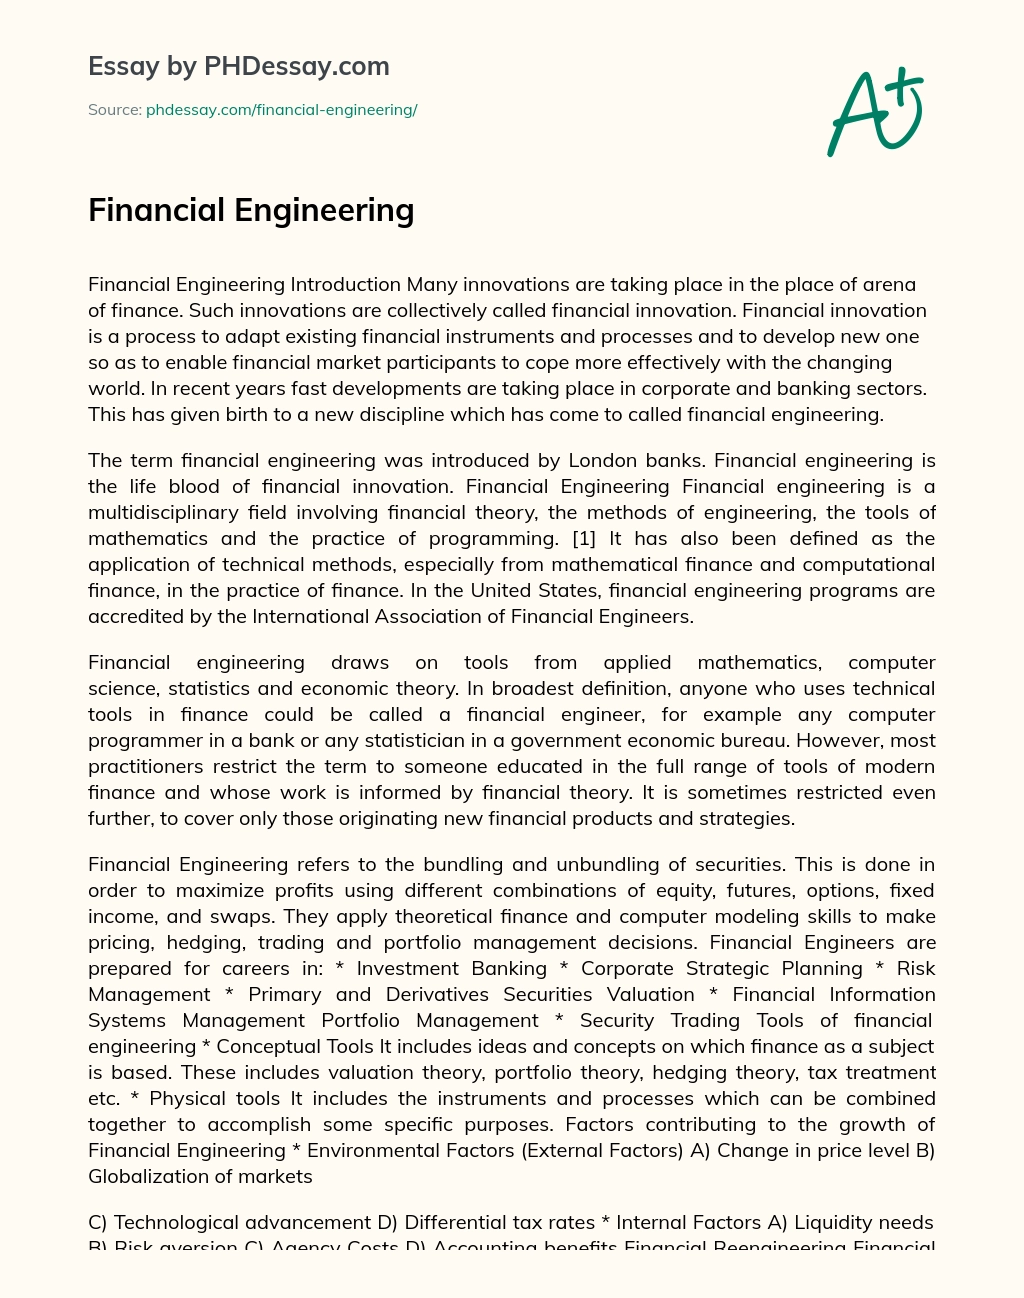 Financial Engineering essay